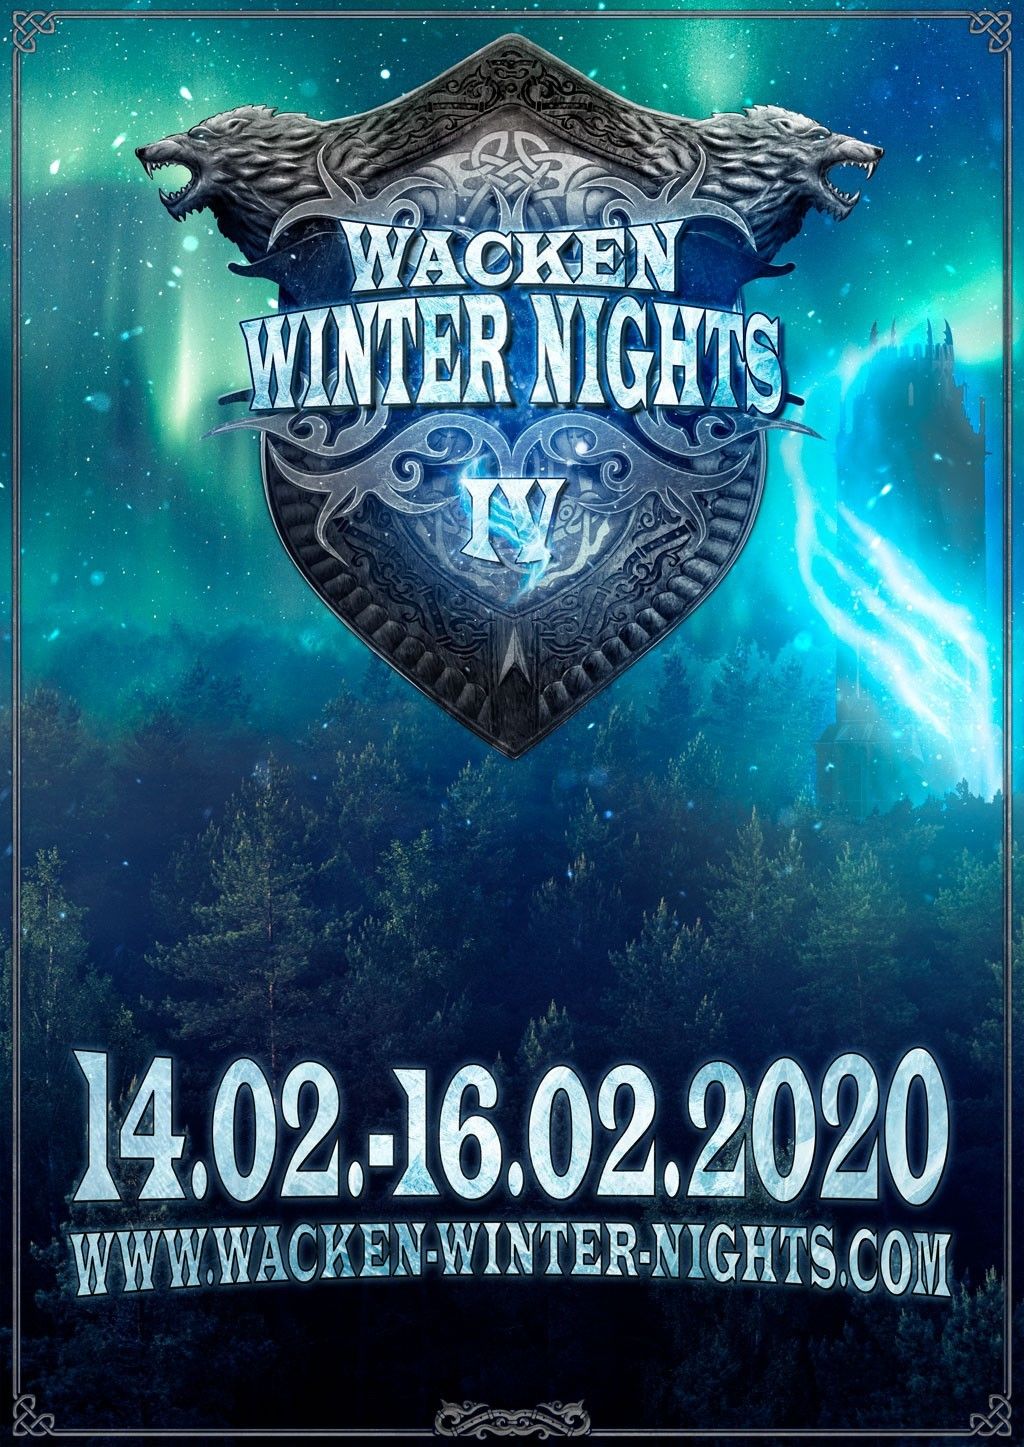 Wacken Winter Nights 2020 abgesagt